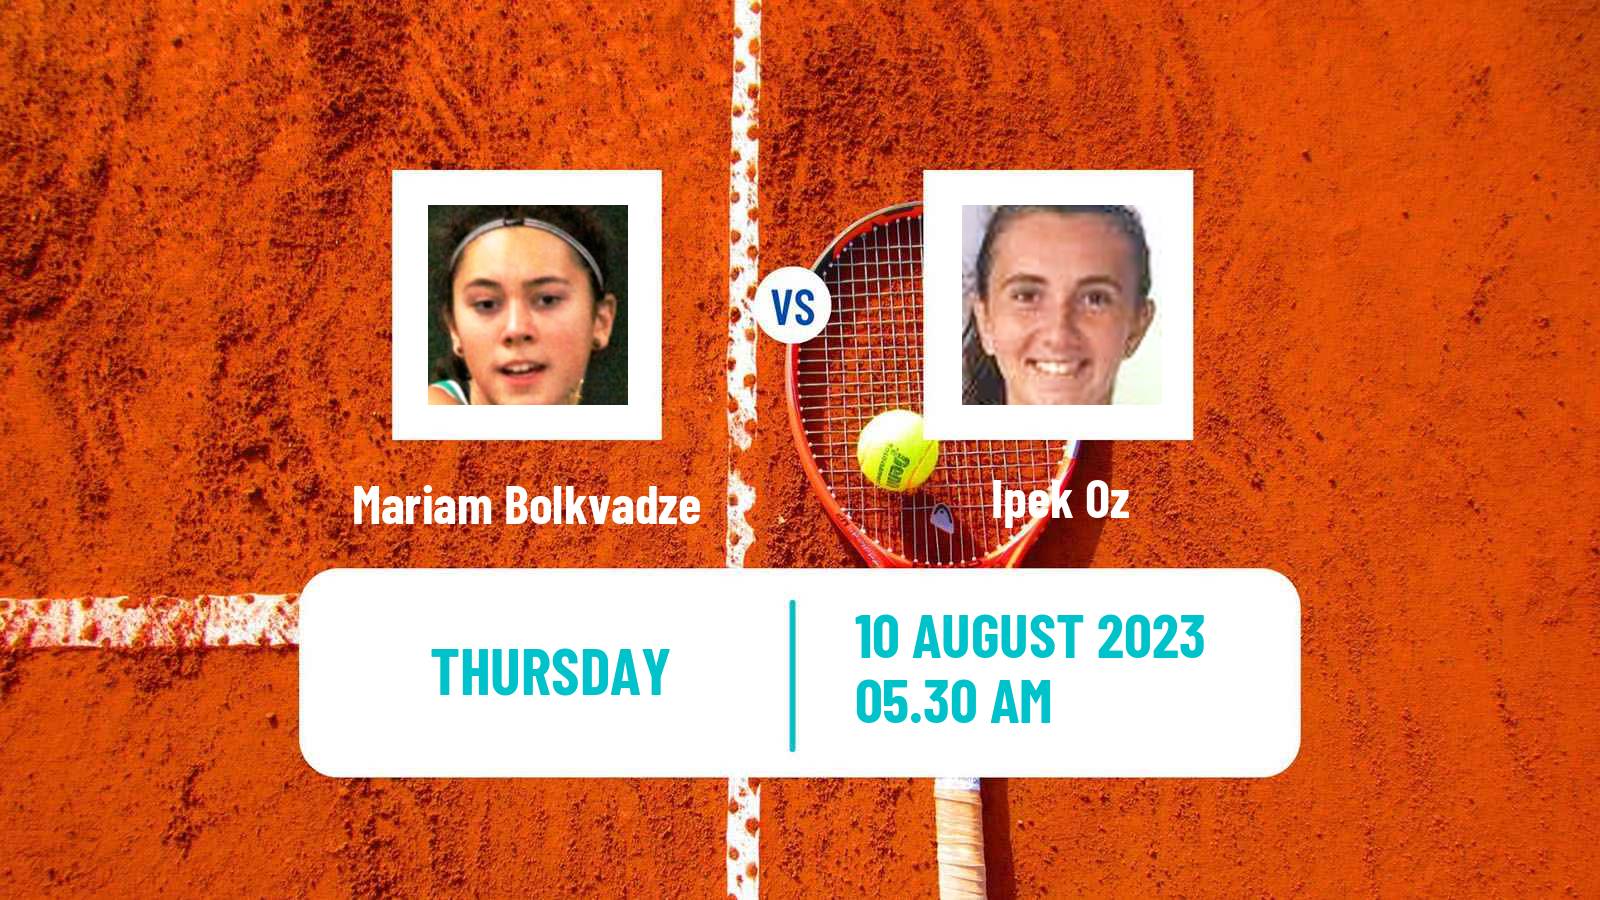 Tennis ITF W25 Roehampton 3 Women Mariam Bolkvadze - Ipek Oz